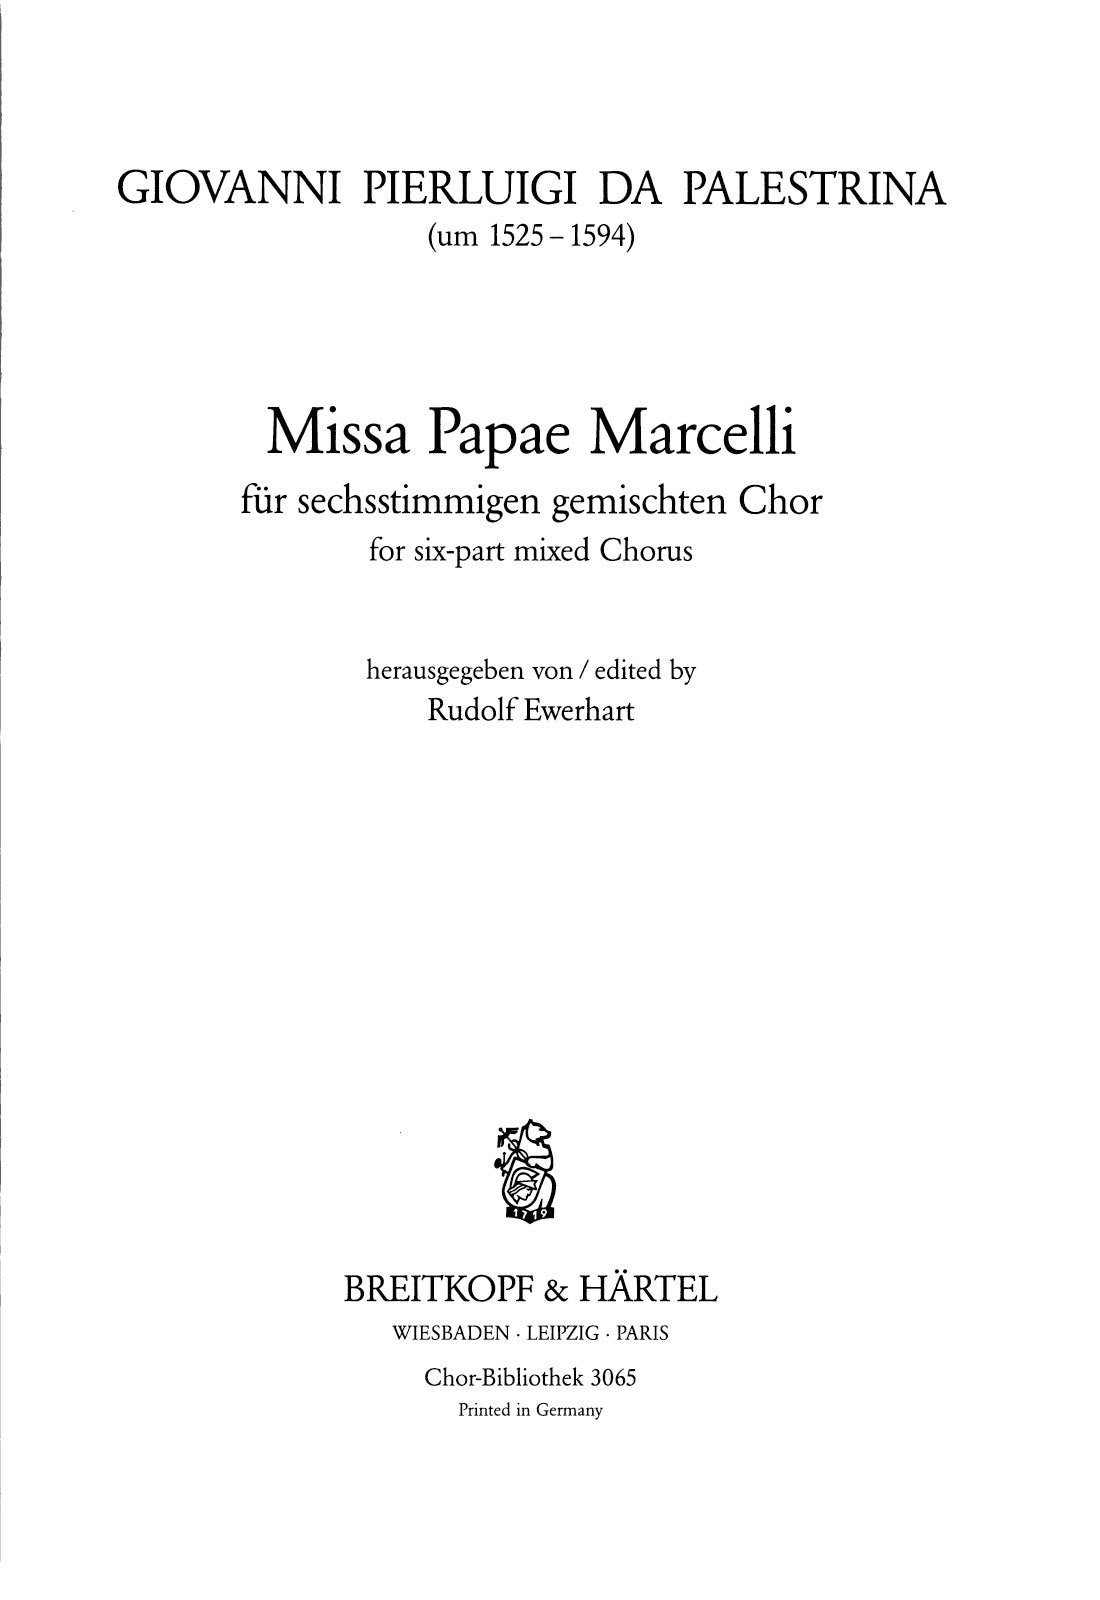 Palestrina: Missa "Papae Marcelli"